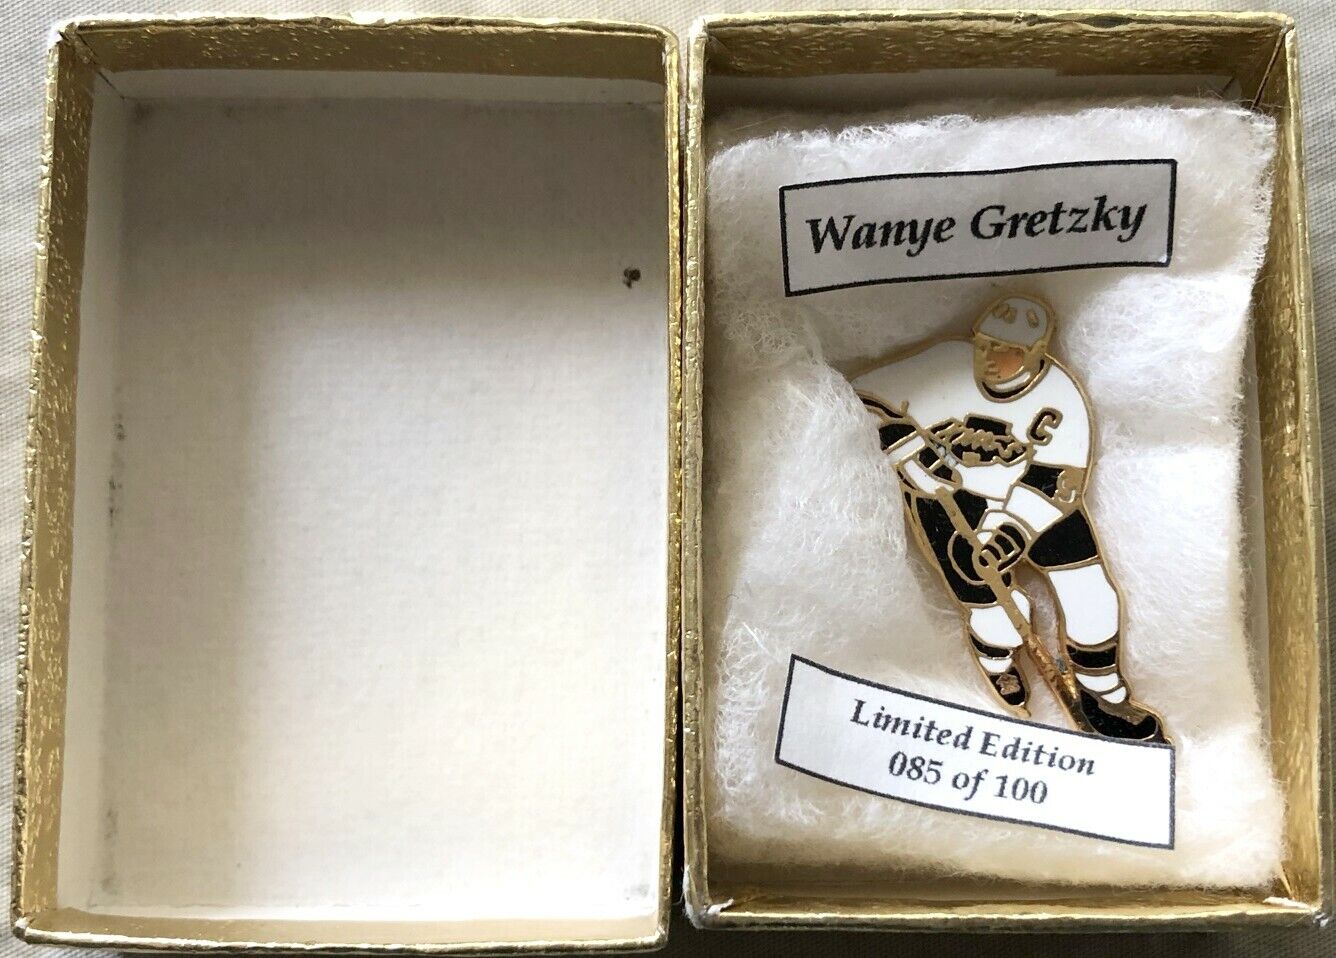 Wayne Gretzky Los Angeles Kings 1.5 inch gold enamel pin Limited Edition #85/100